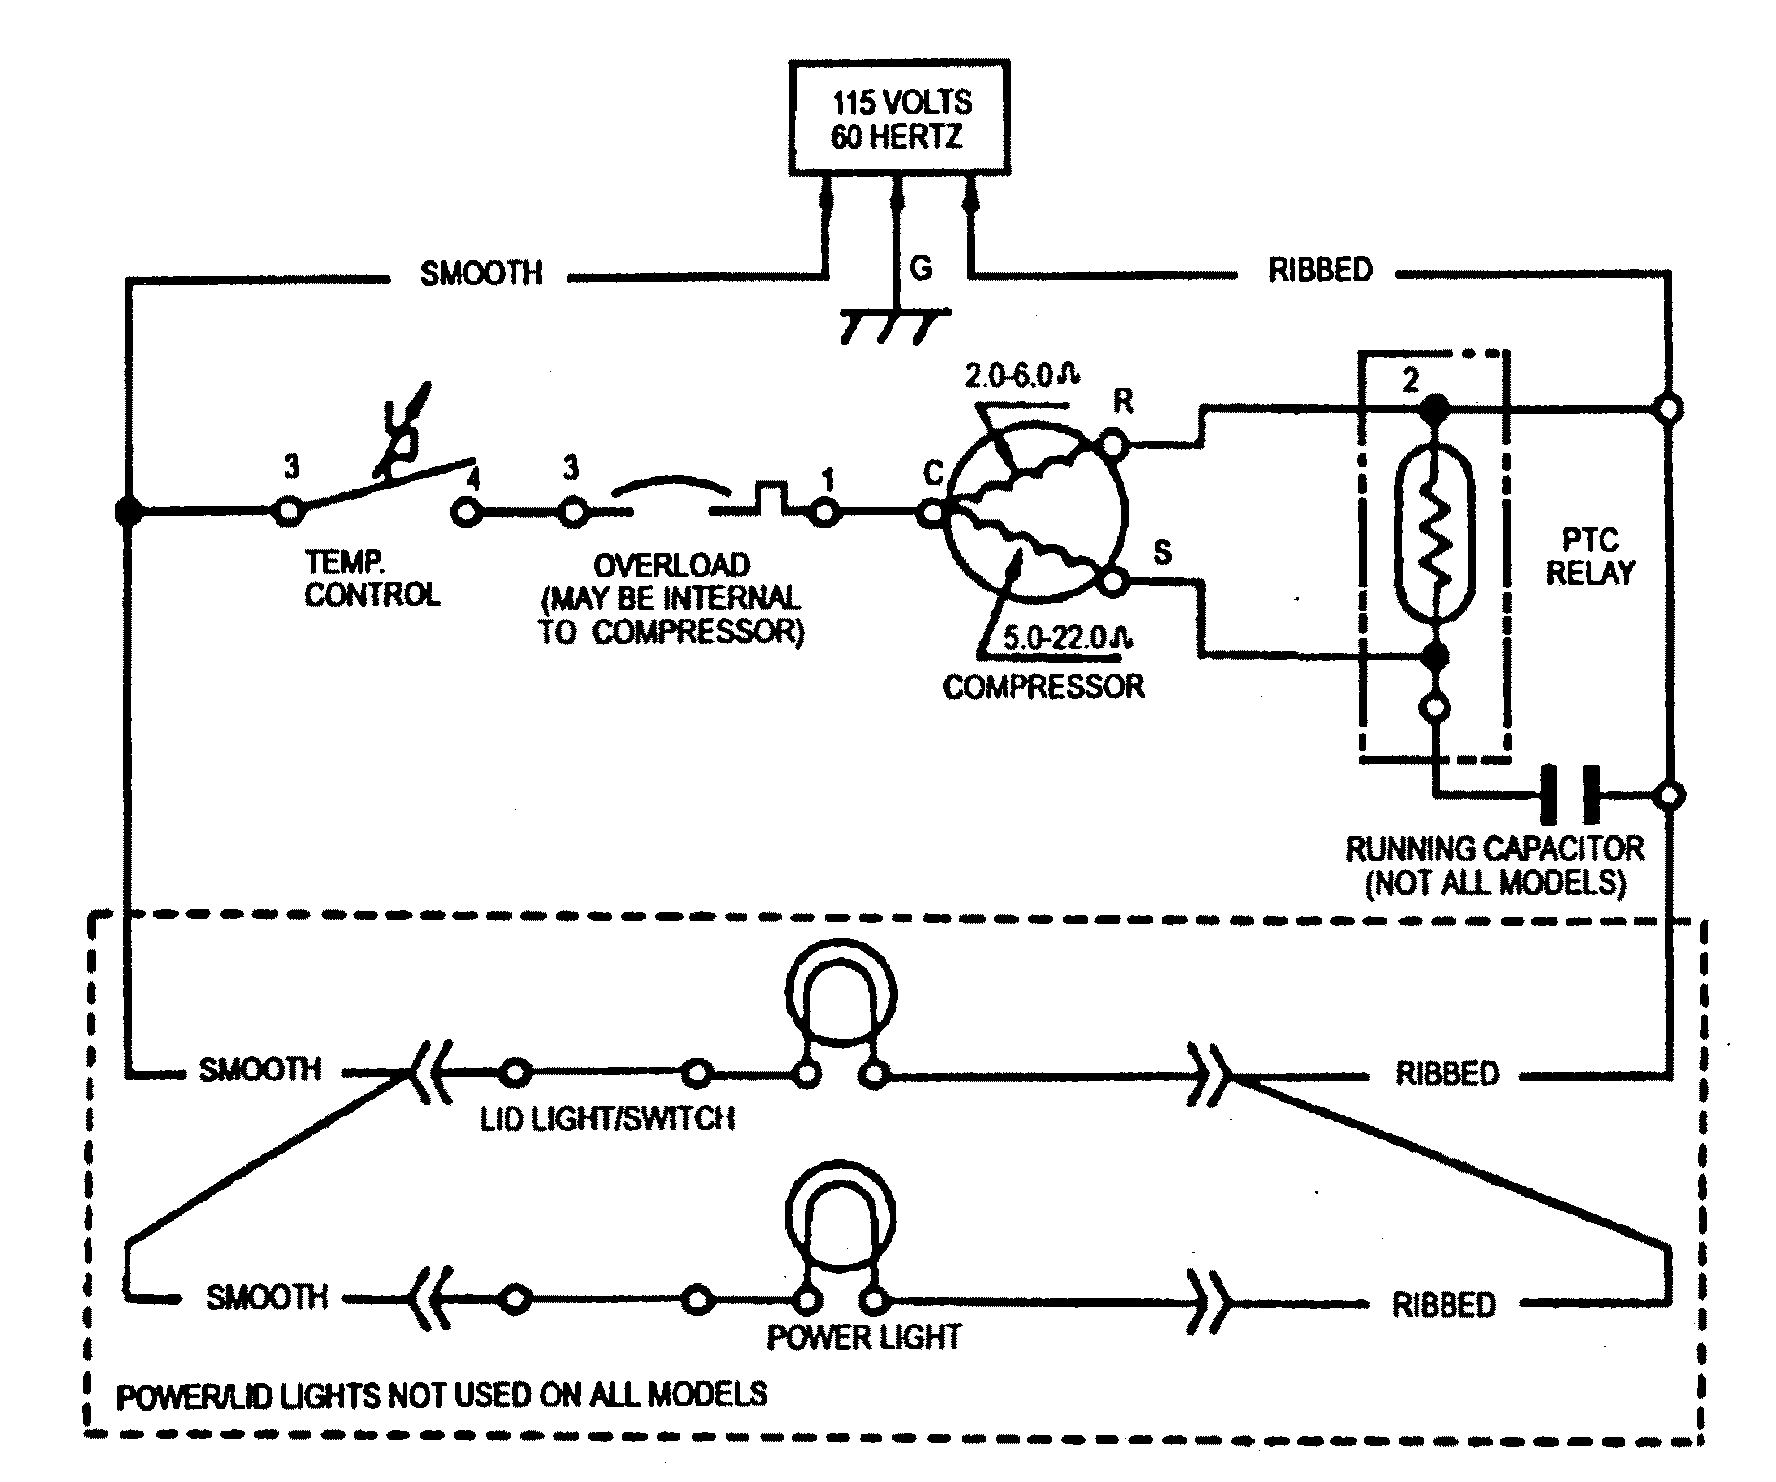 Refrigerator Compressor Relay Wiring Diagram from c.searspartsdirect.com